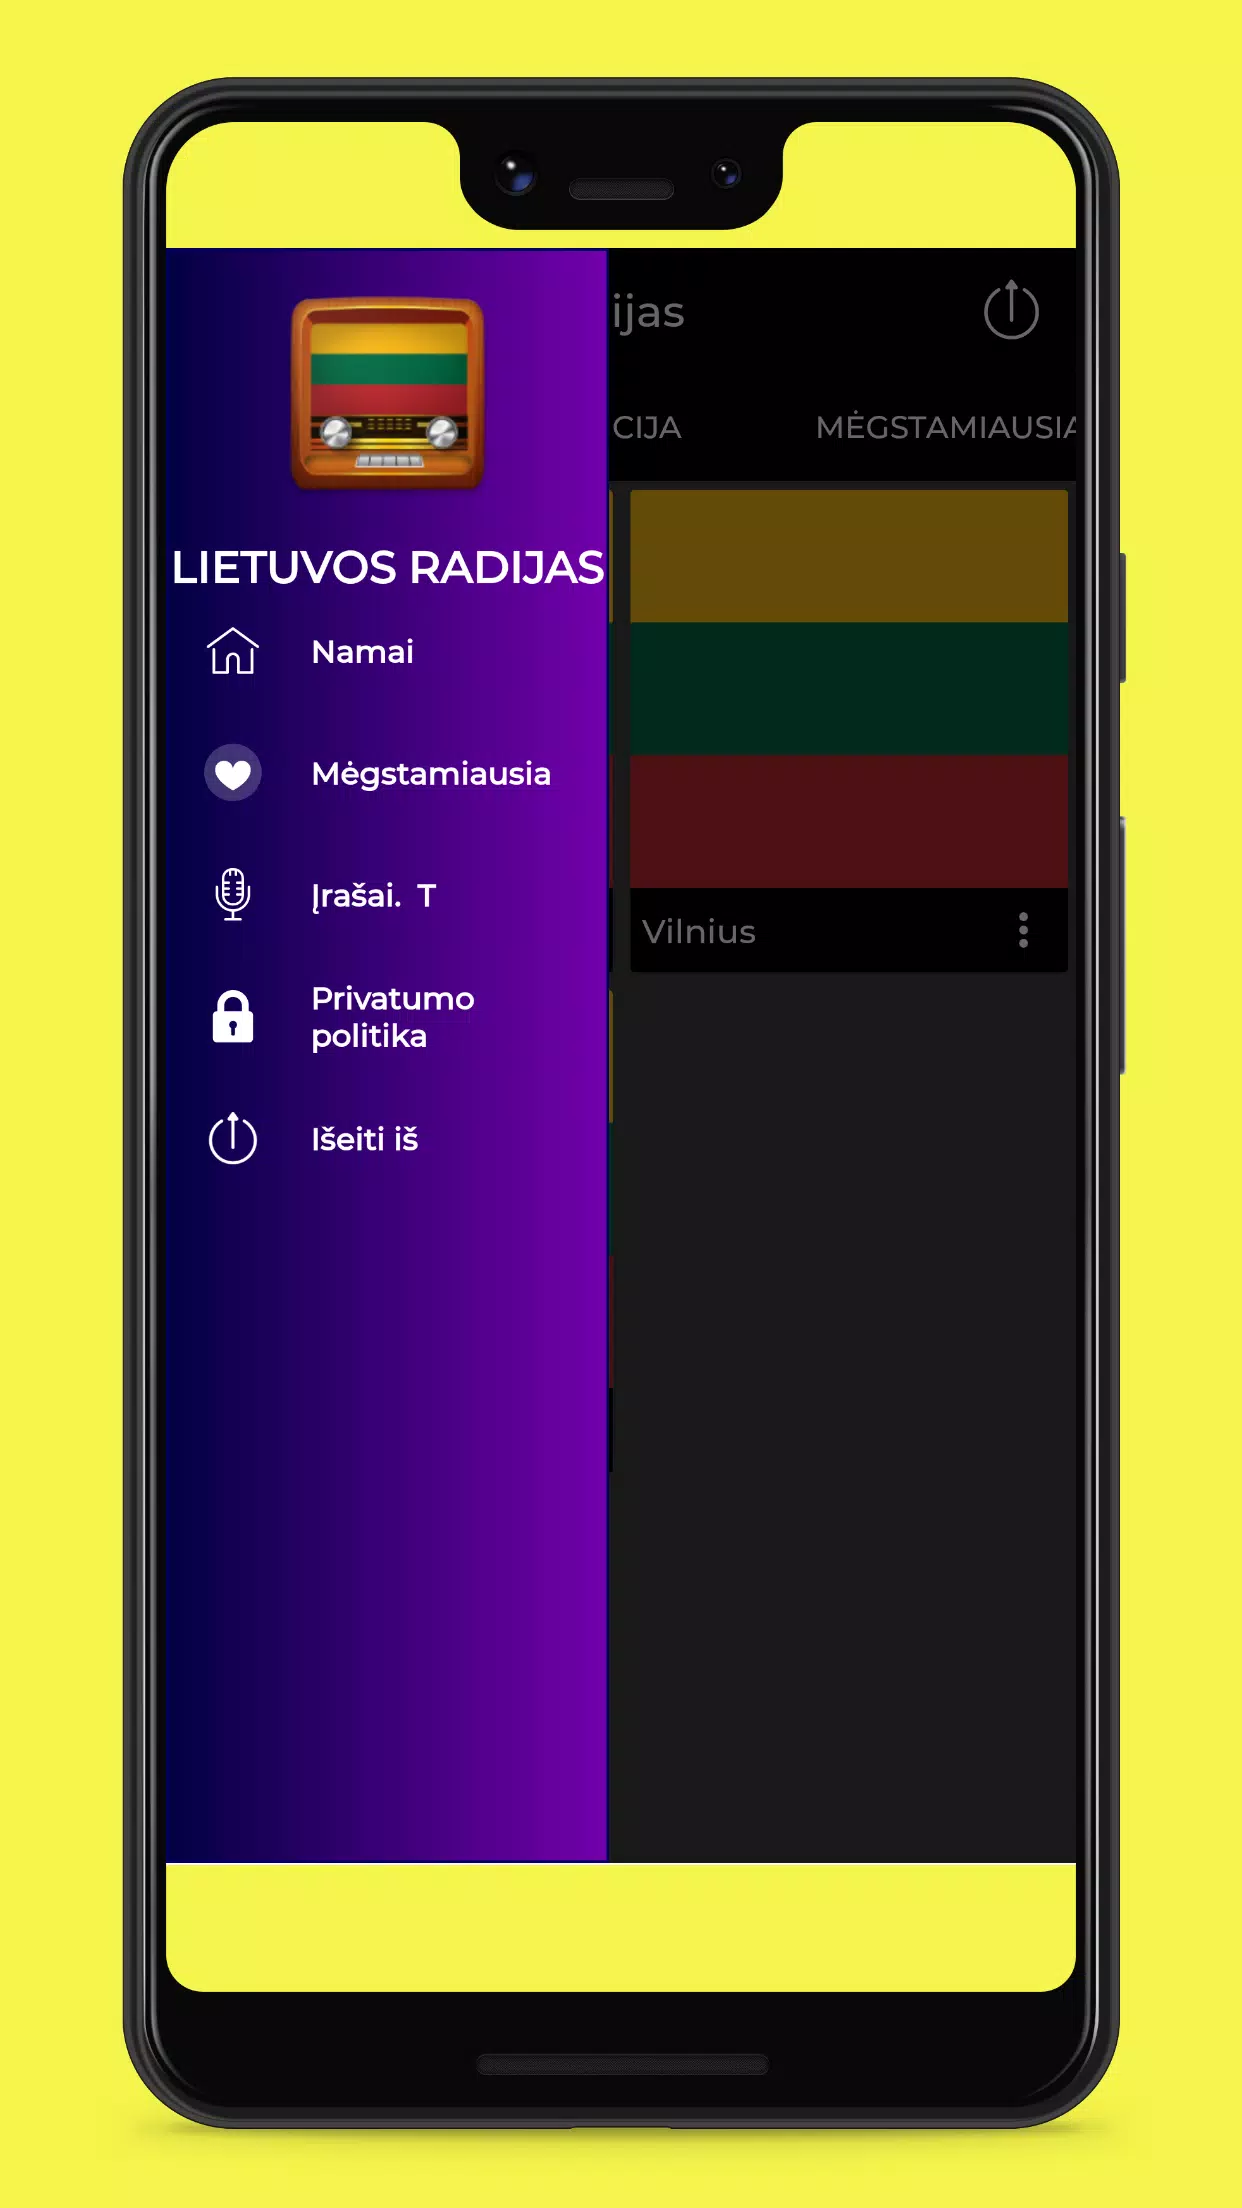 Lietuvos Radijas - Radijas Nemokamai Internete APK pour Android Télécharger